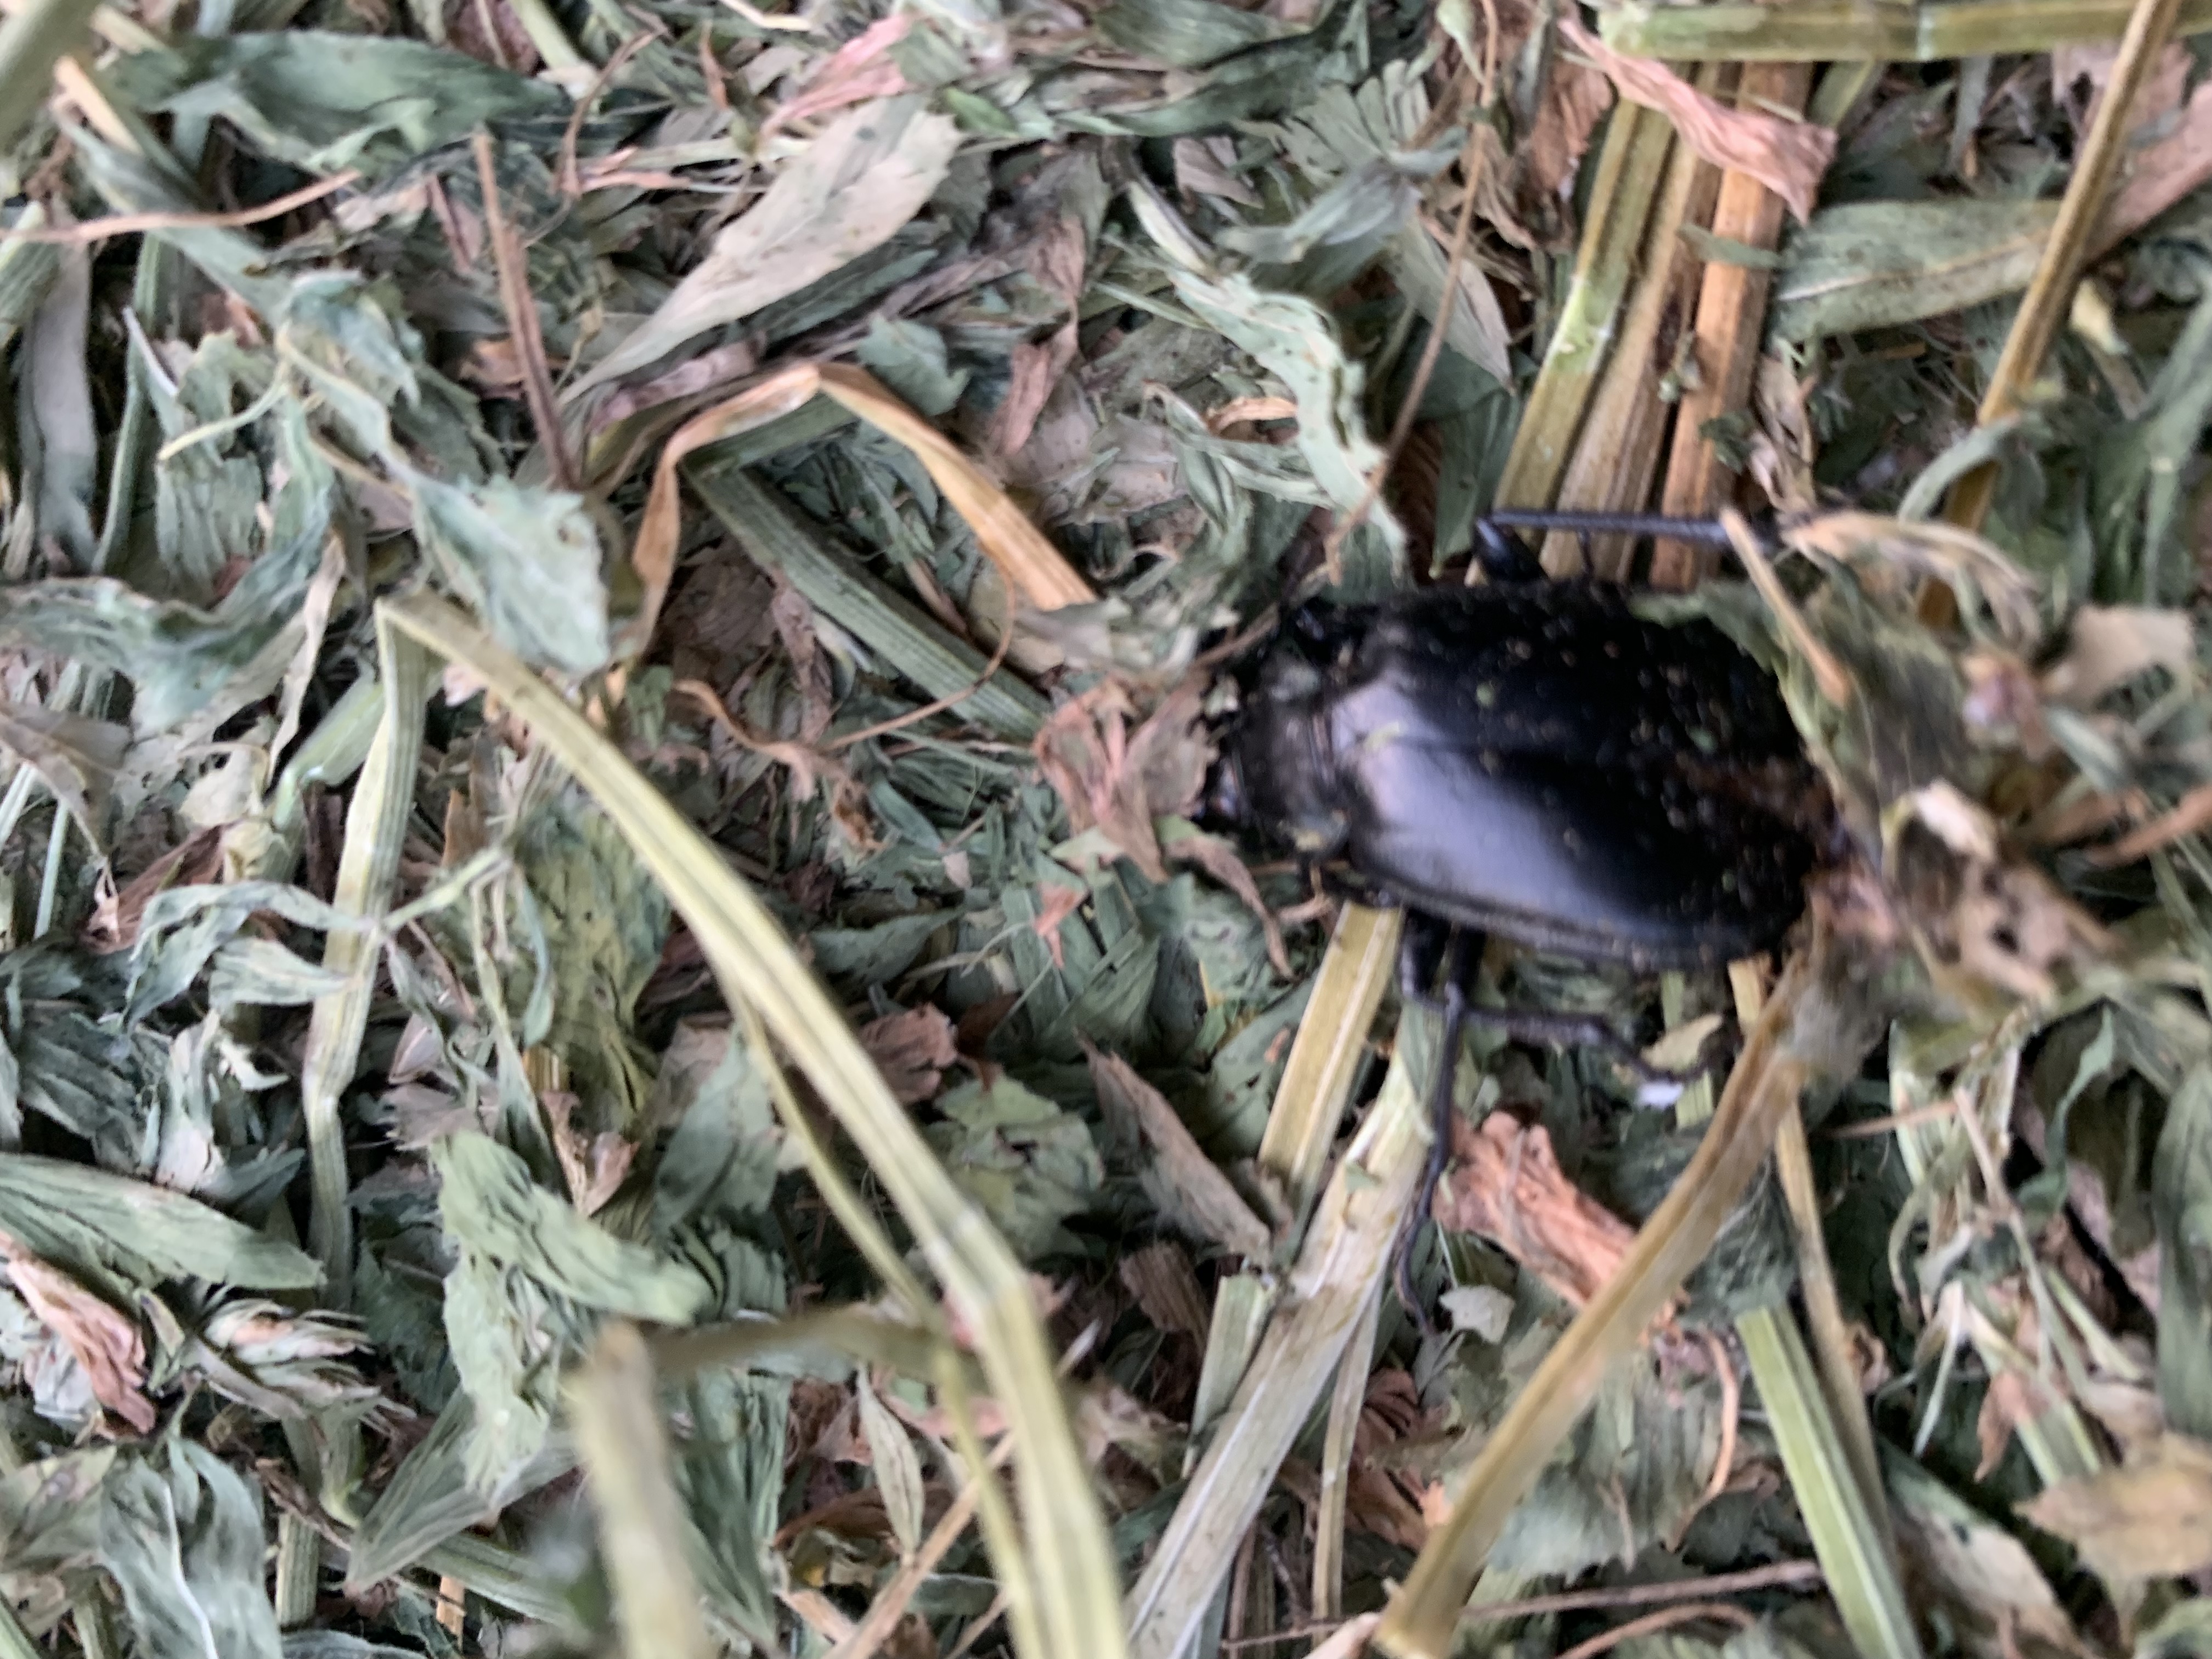 blister bugs in alfalfa hay